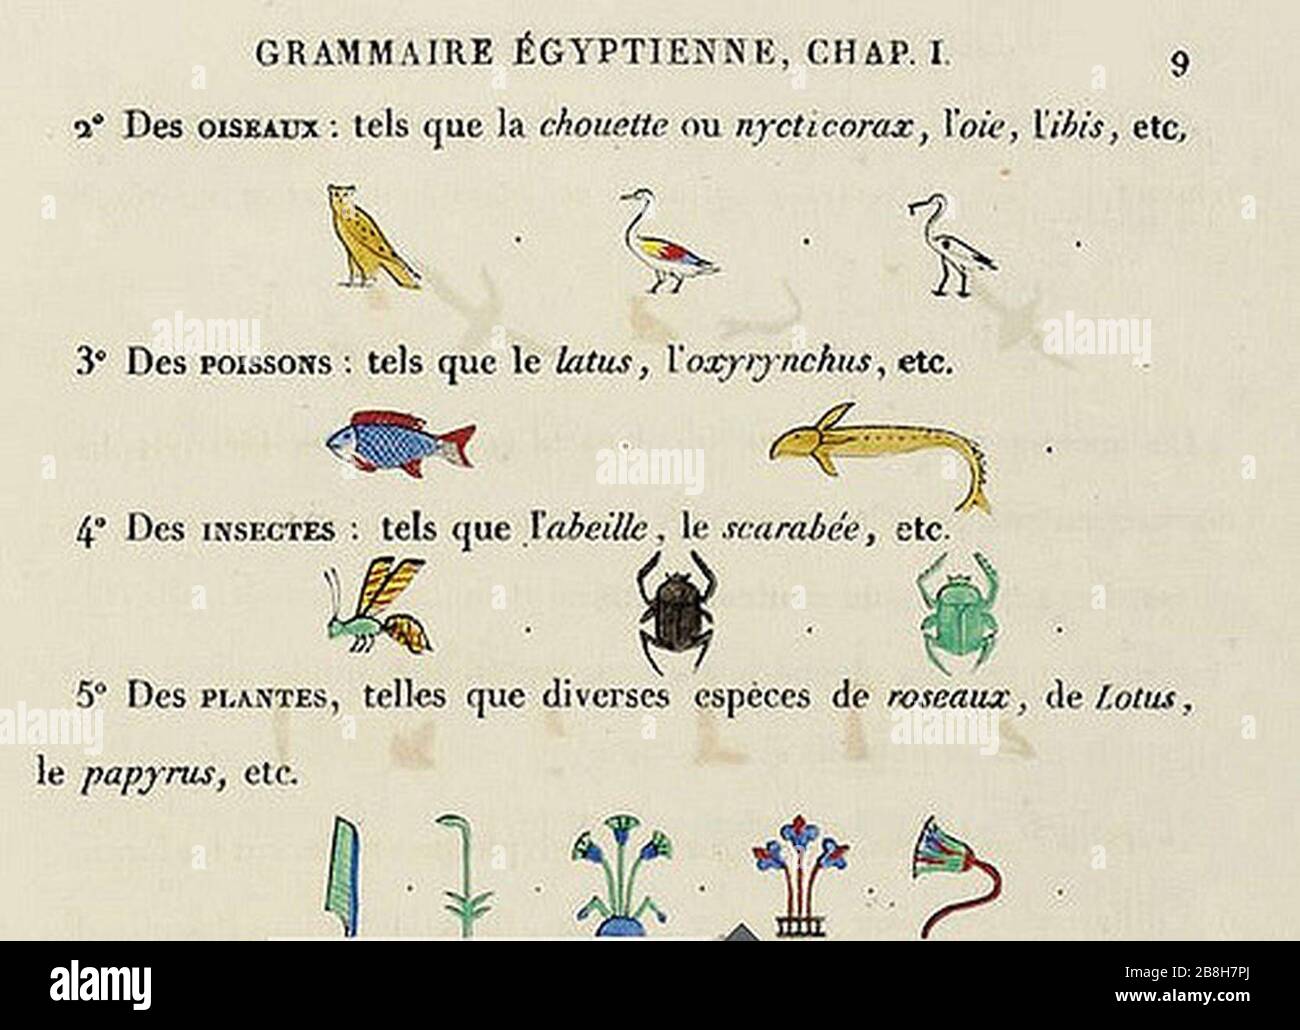 Grammaire égyptienne chap. I p. 9. Stock Photo